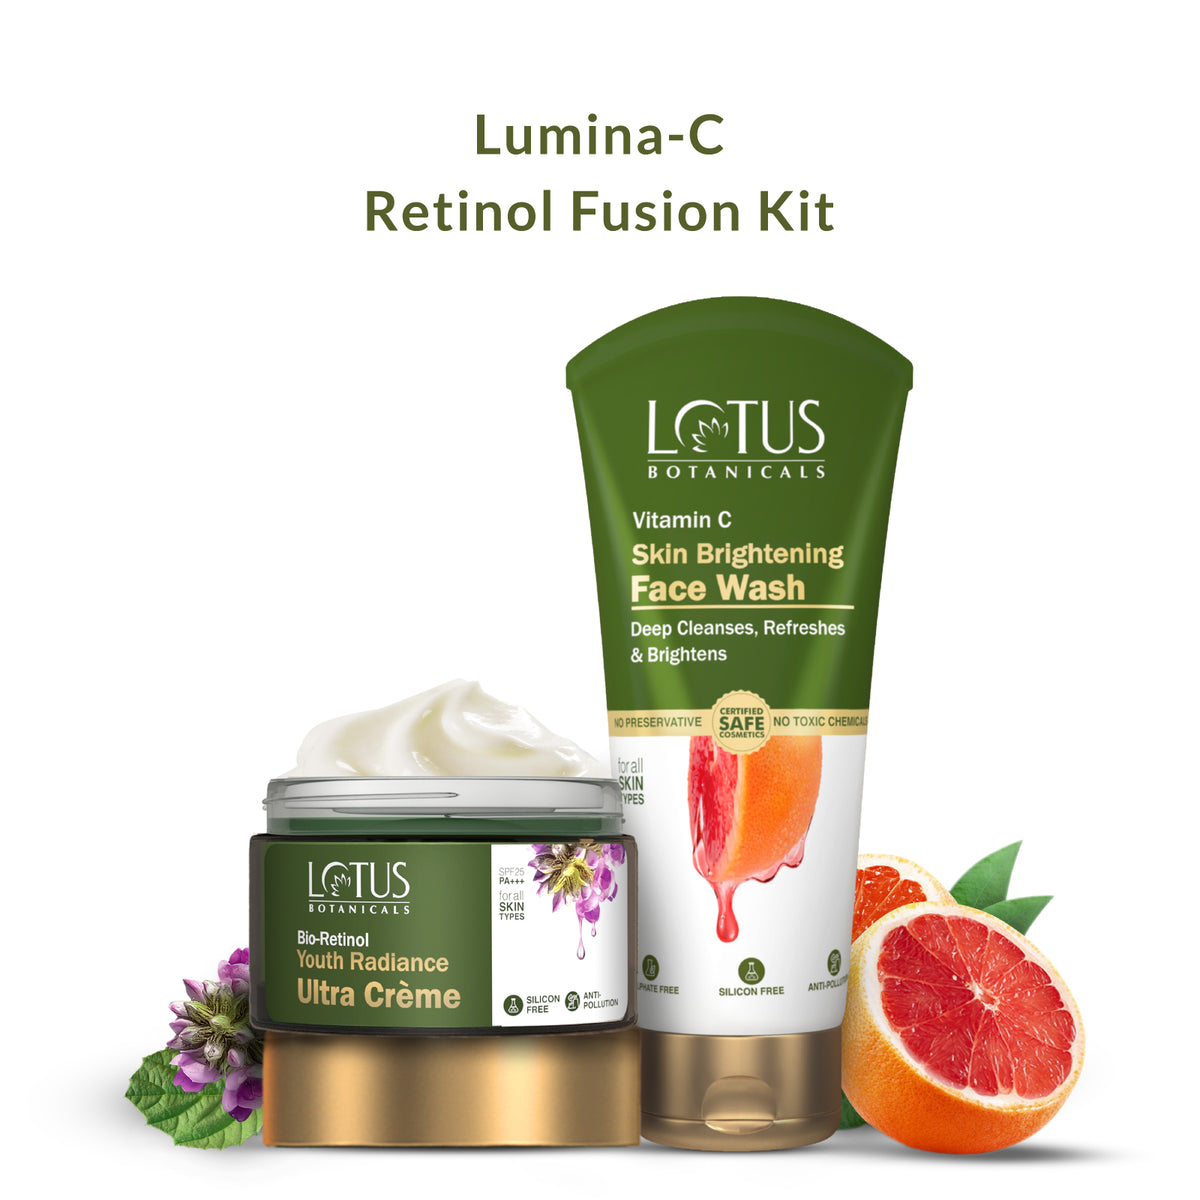 Lumina-C Retinol Fusion Kit